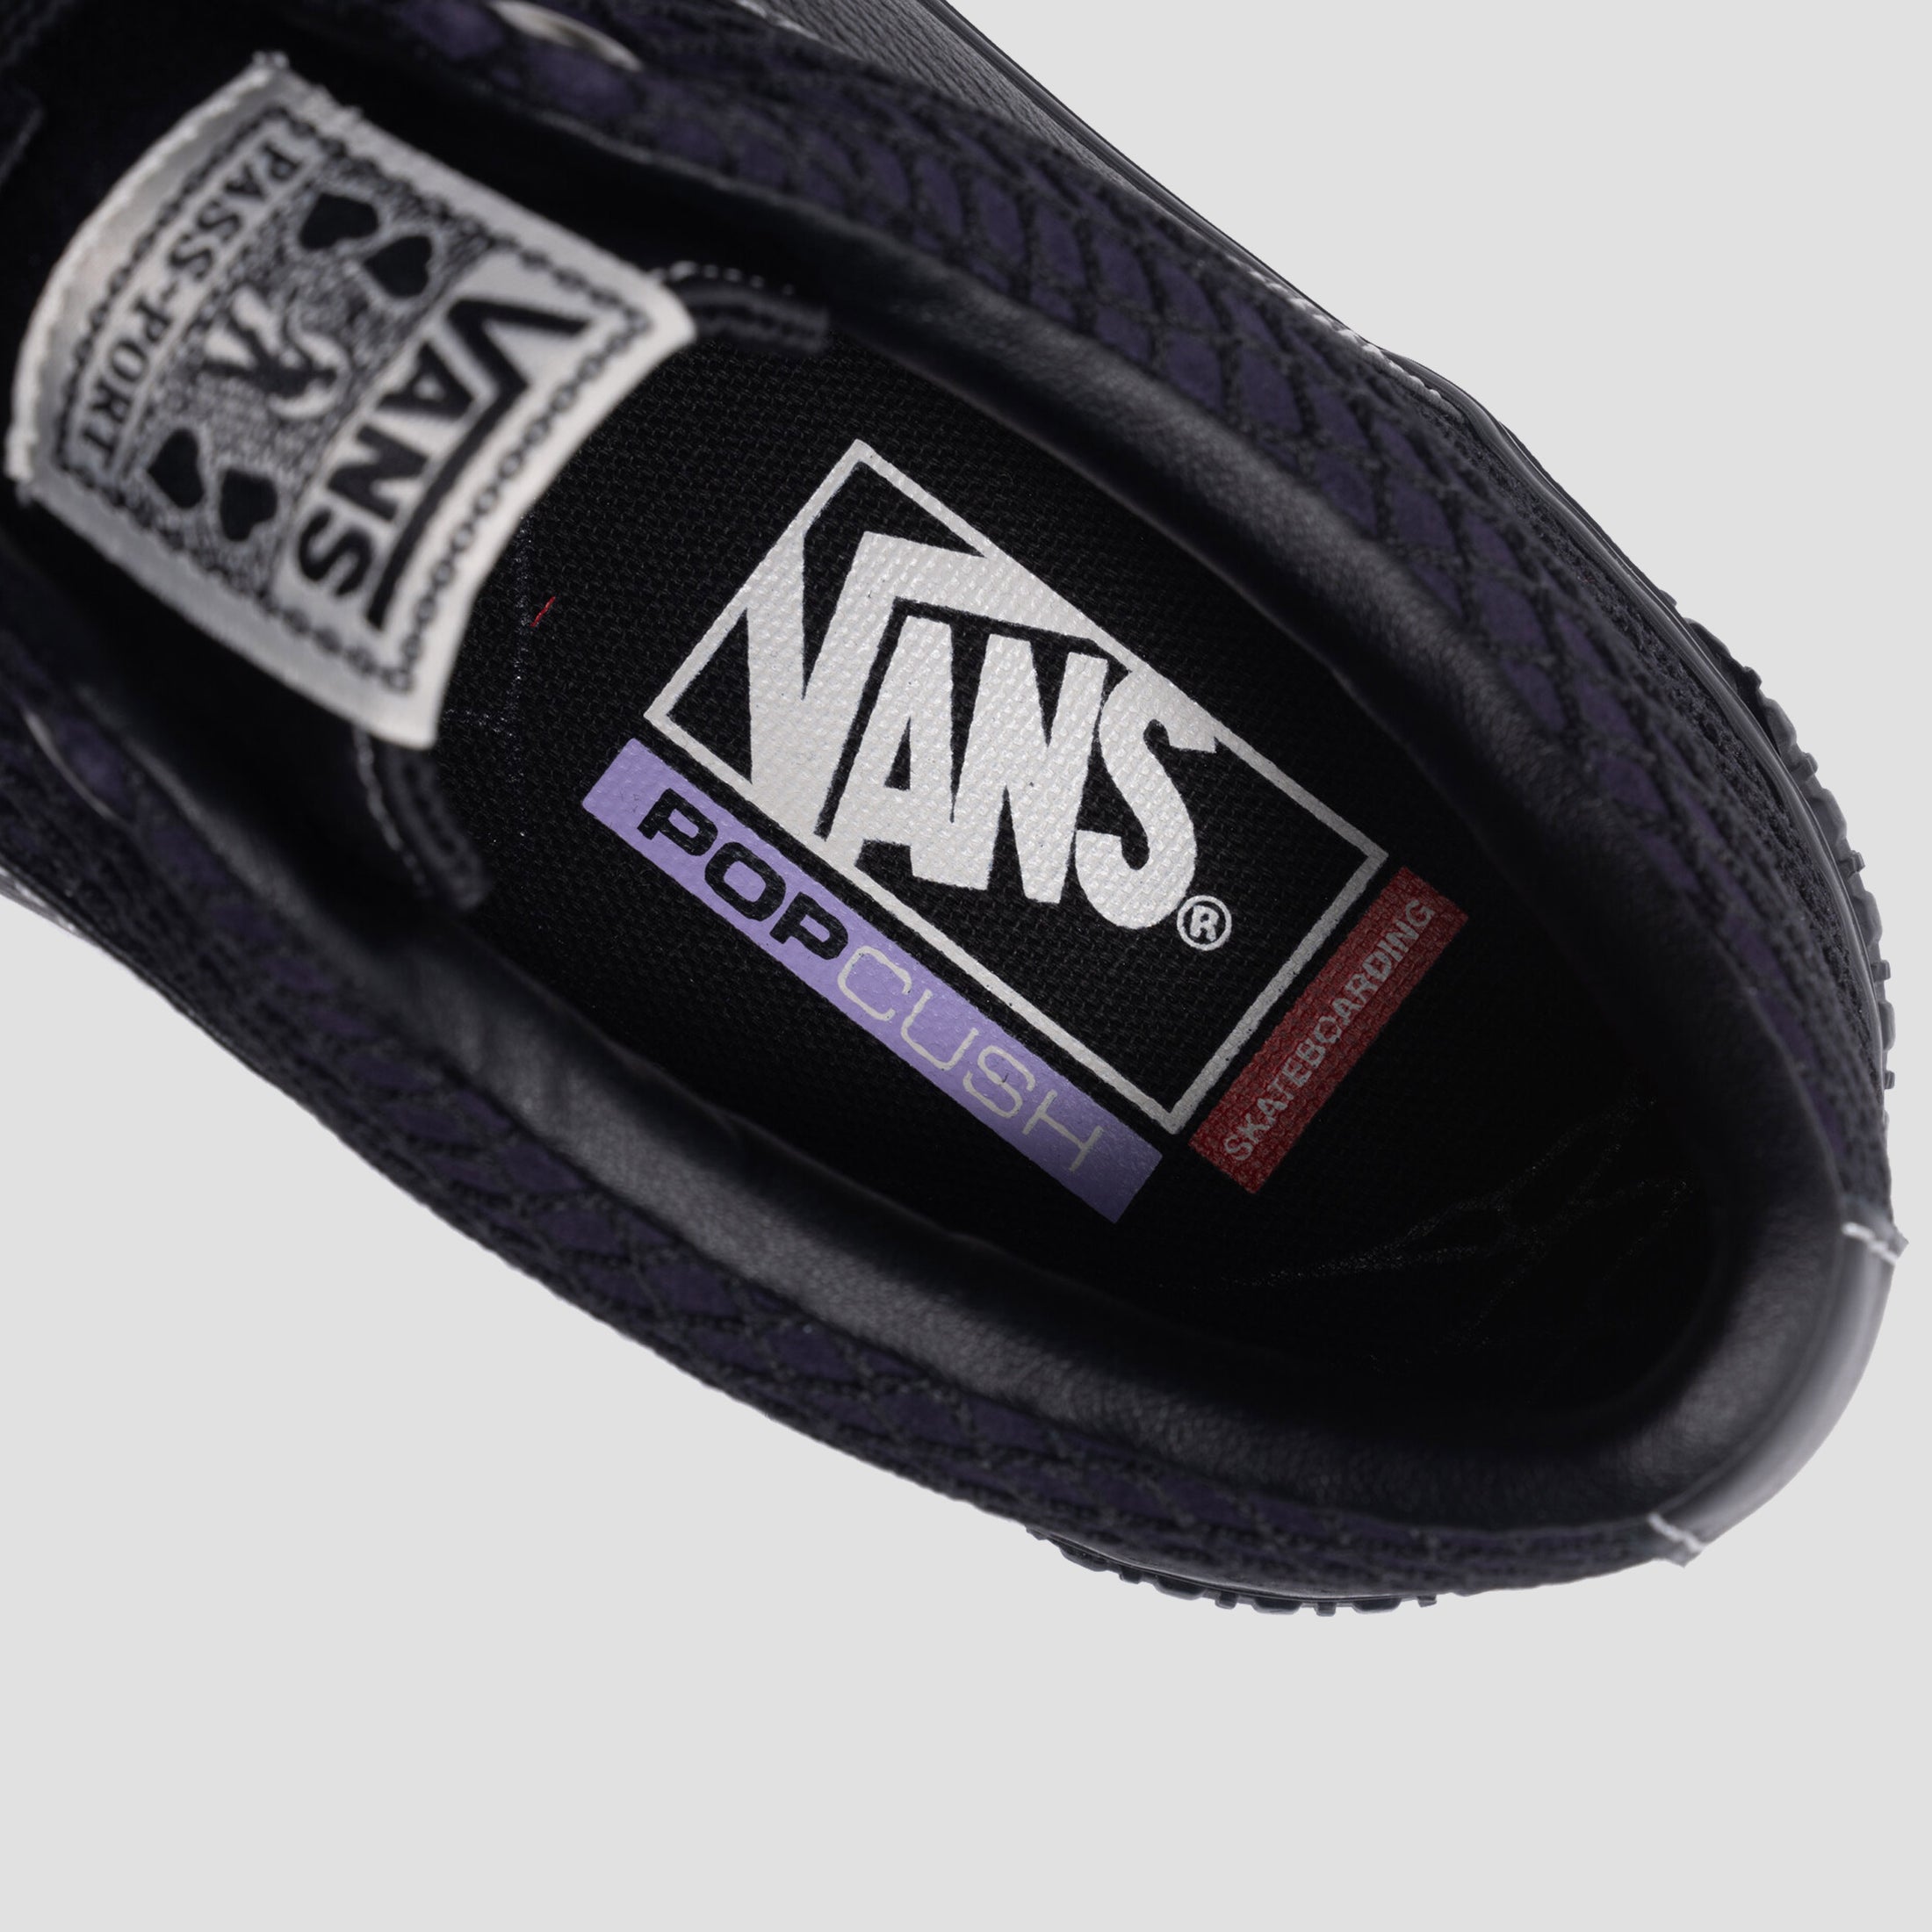 Vans X Passport Skate Lampin Skate Shoes Black / Purple